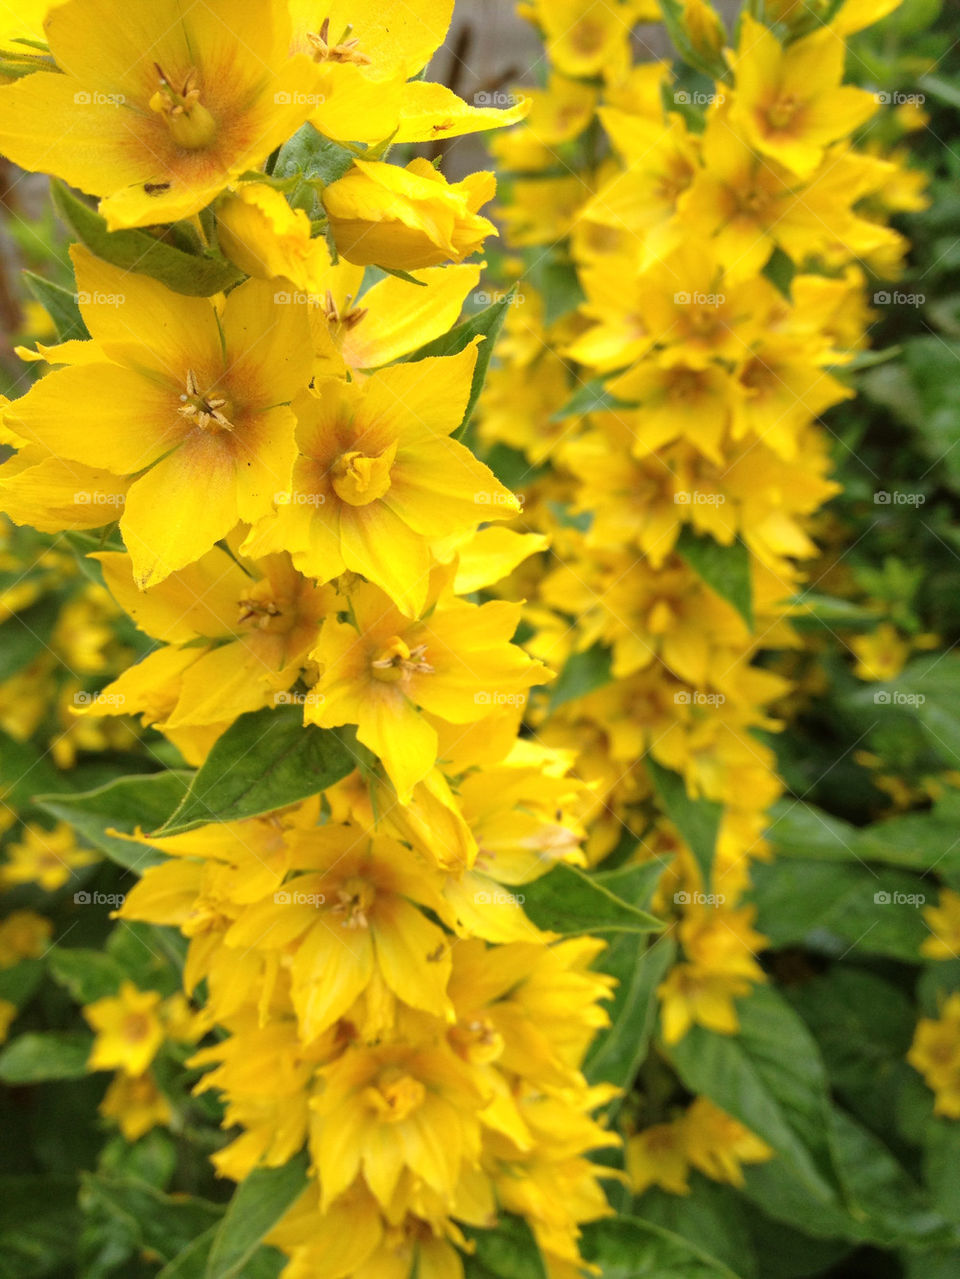 flowers garden yellow plant by gsplan